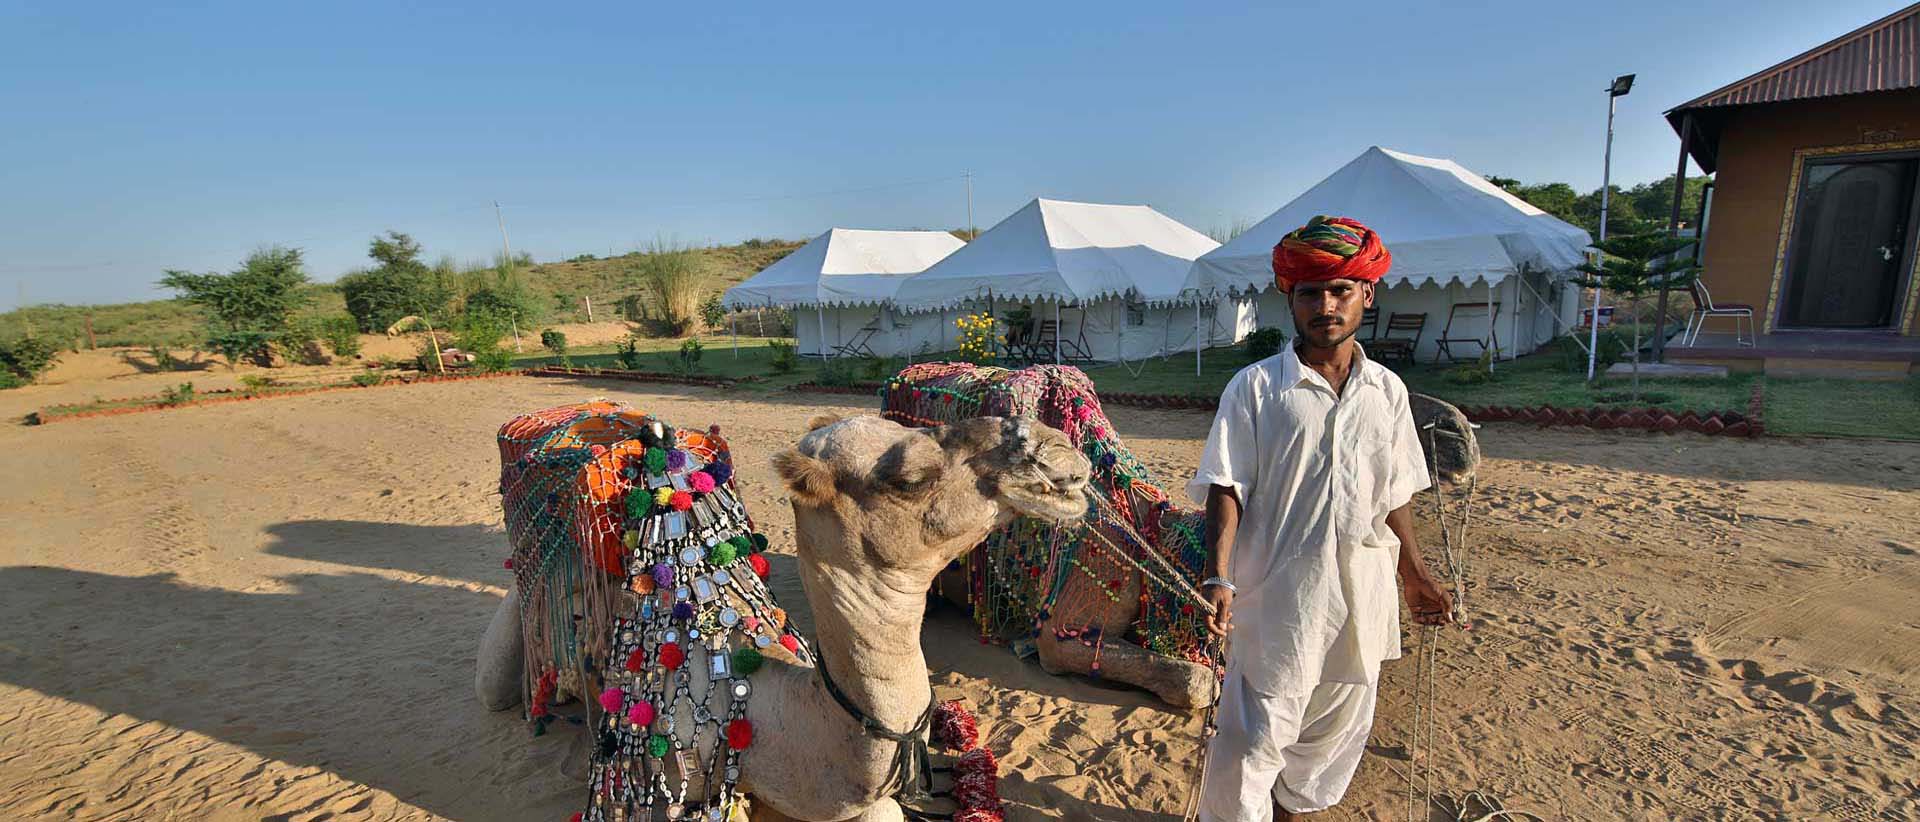 camp pushkar,desert camp,tent pushkar,fair accomodation, adventure pushkar safari, camel safari